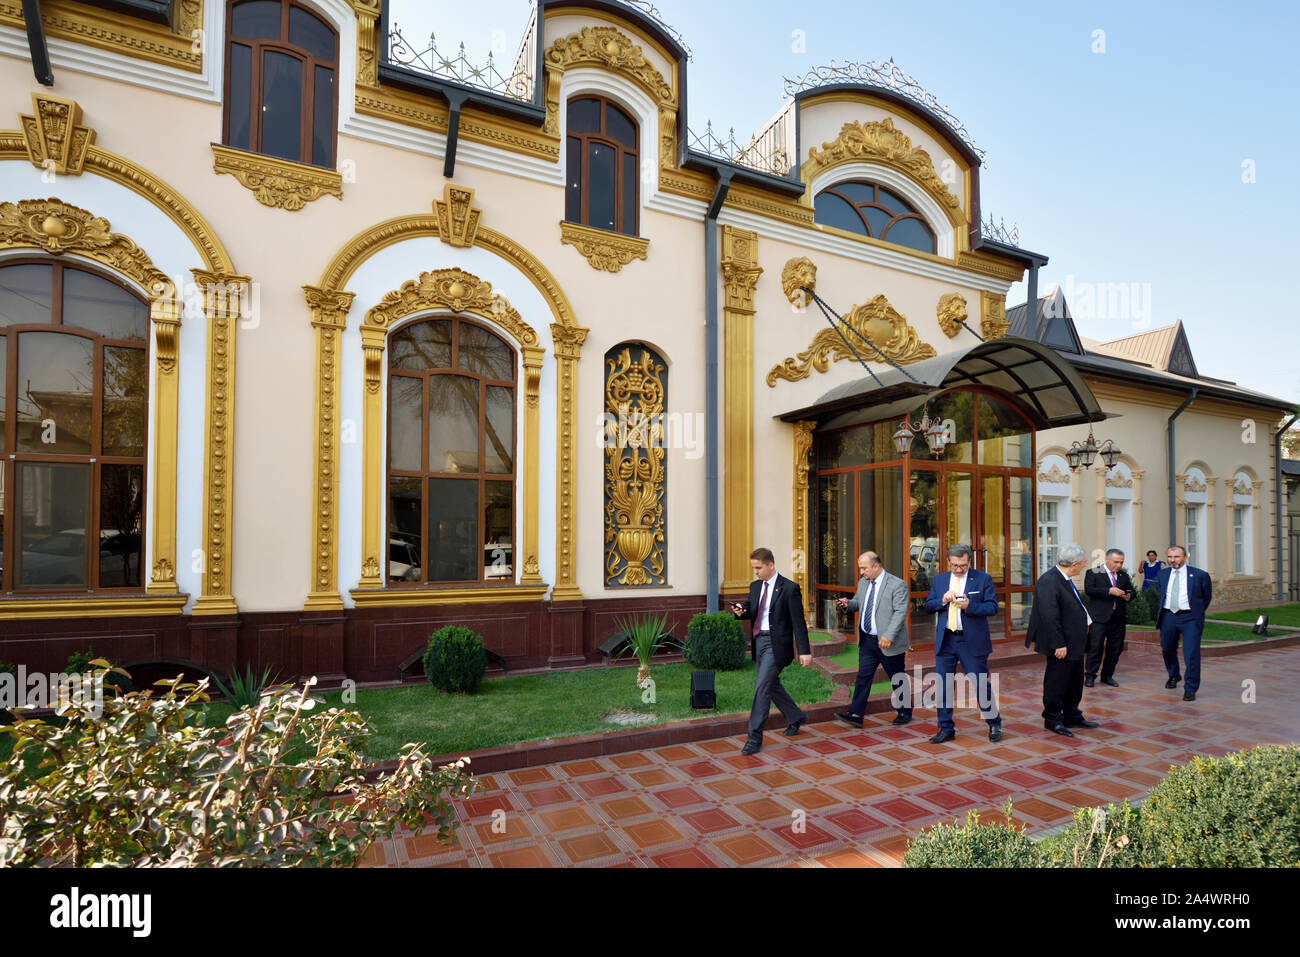 Facade of the Samarkand Restaurant, one of the best restaurants in Samarkand. Uzbekistan Stock Photo